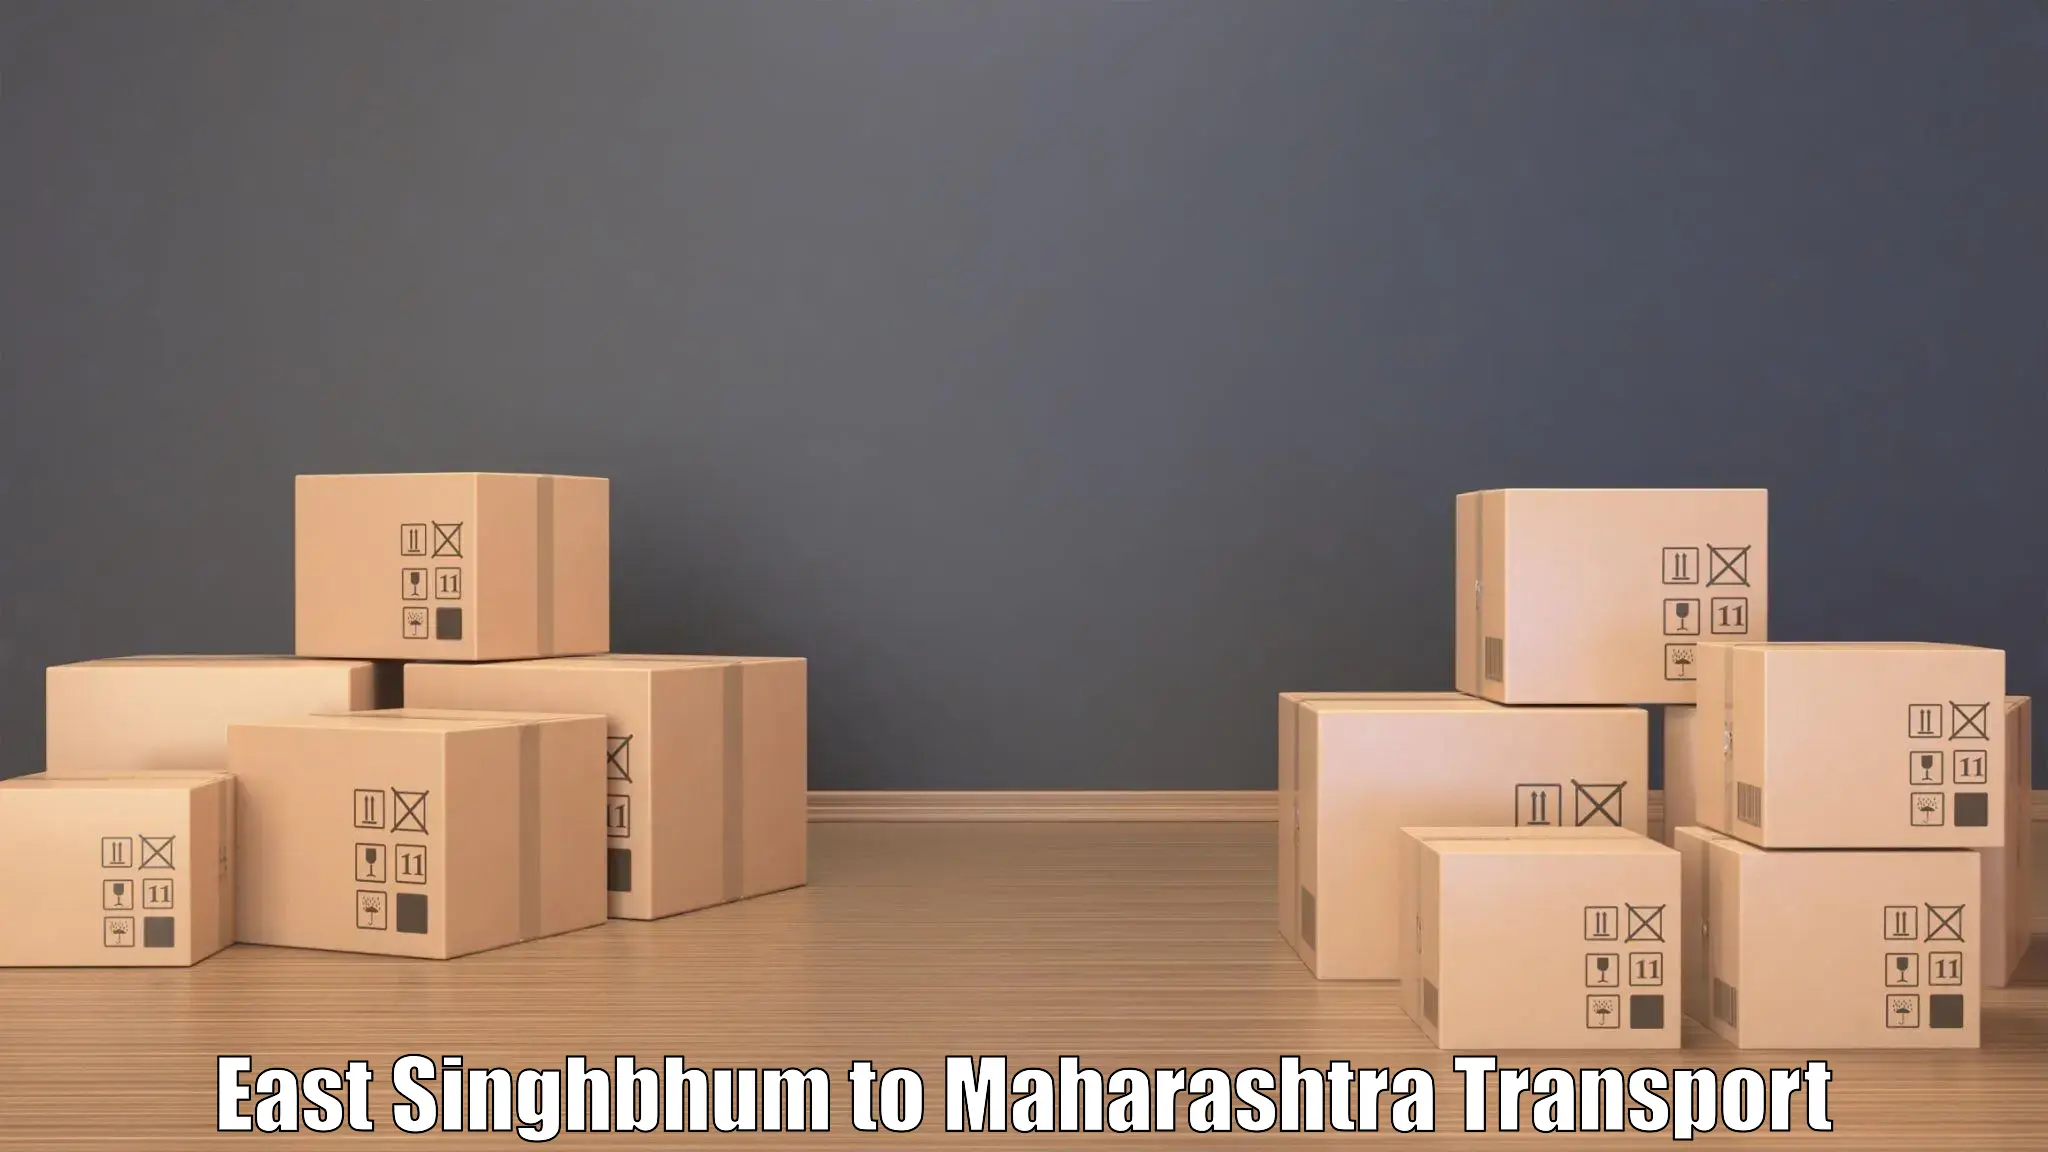 Truck transport companies in India East Singhbhum to Hinganghat